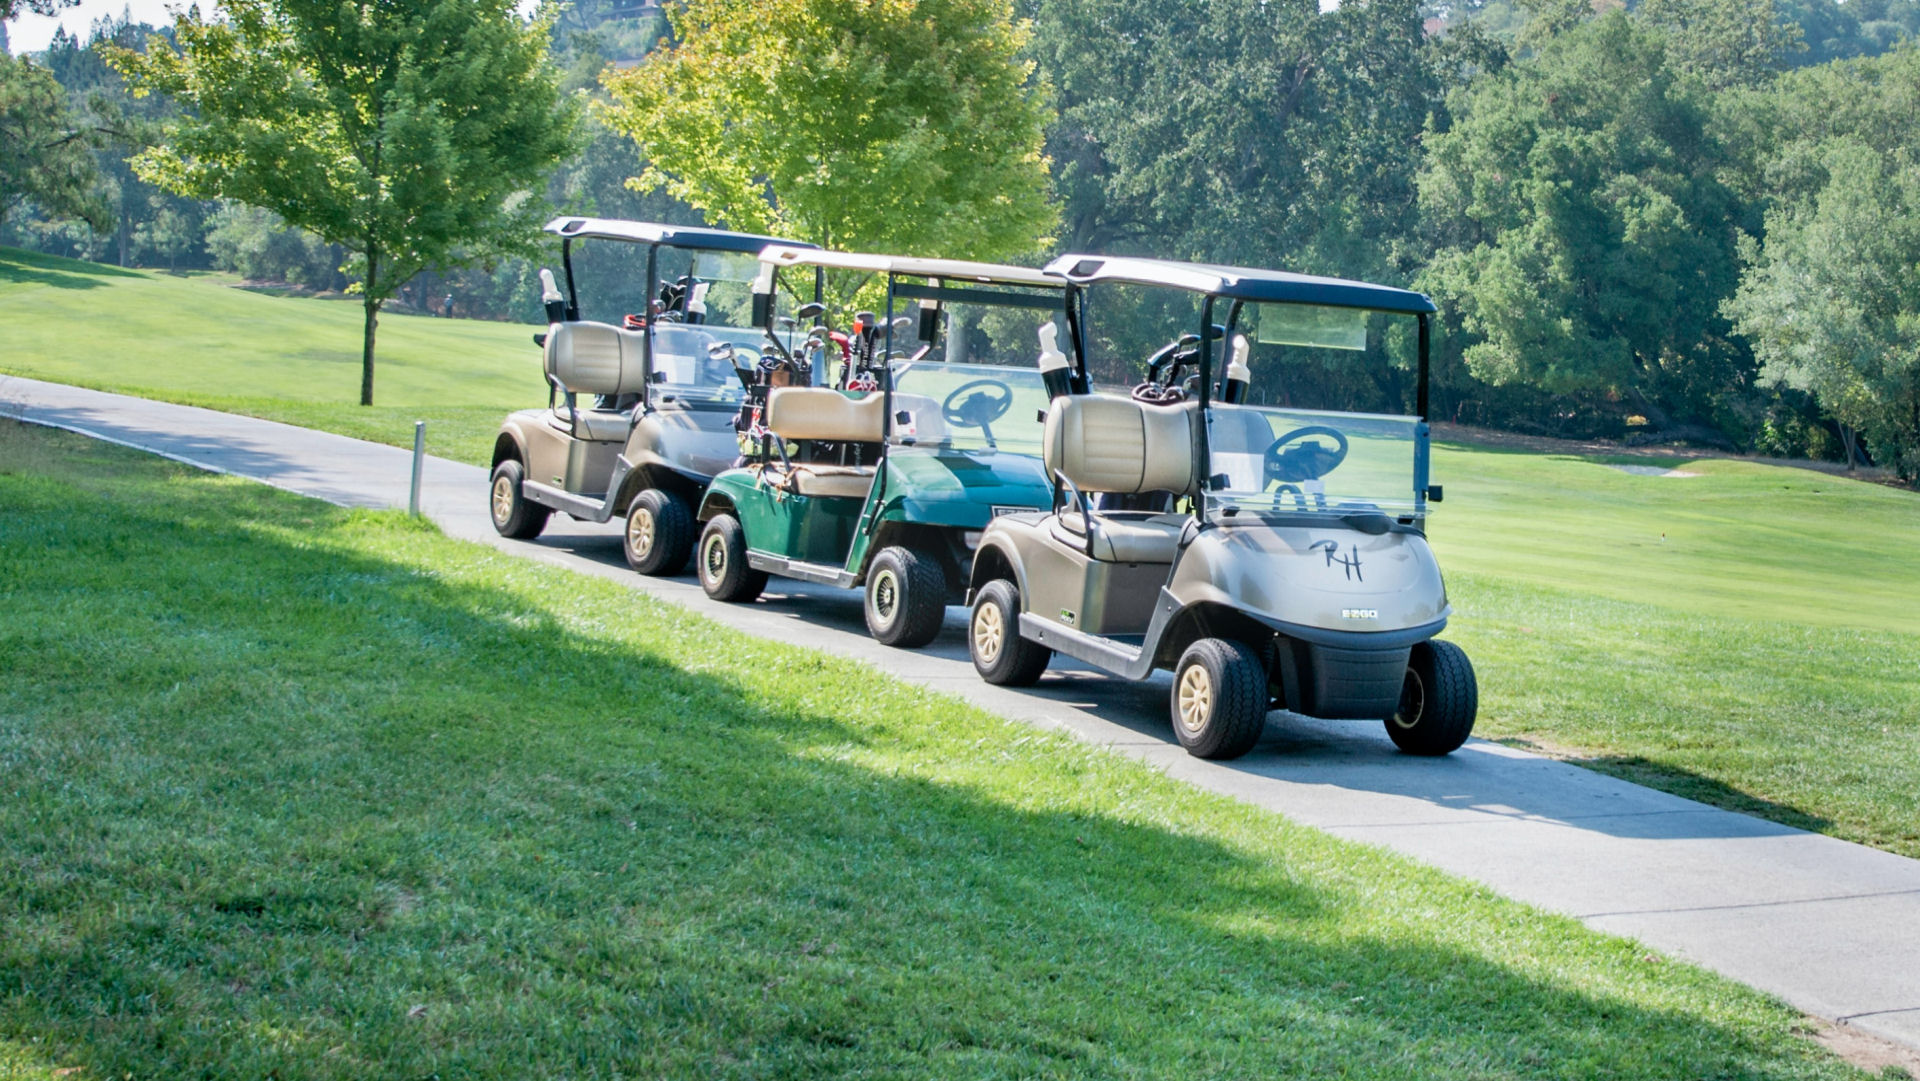 Economy Golf Carts